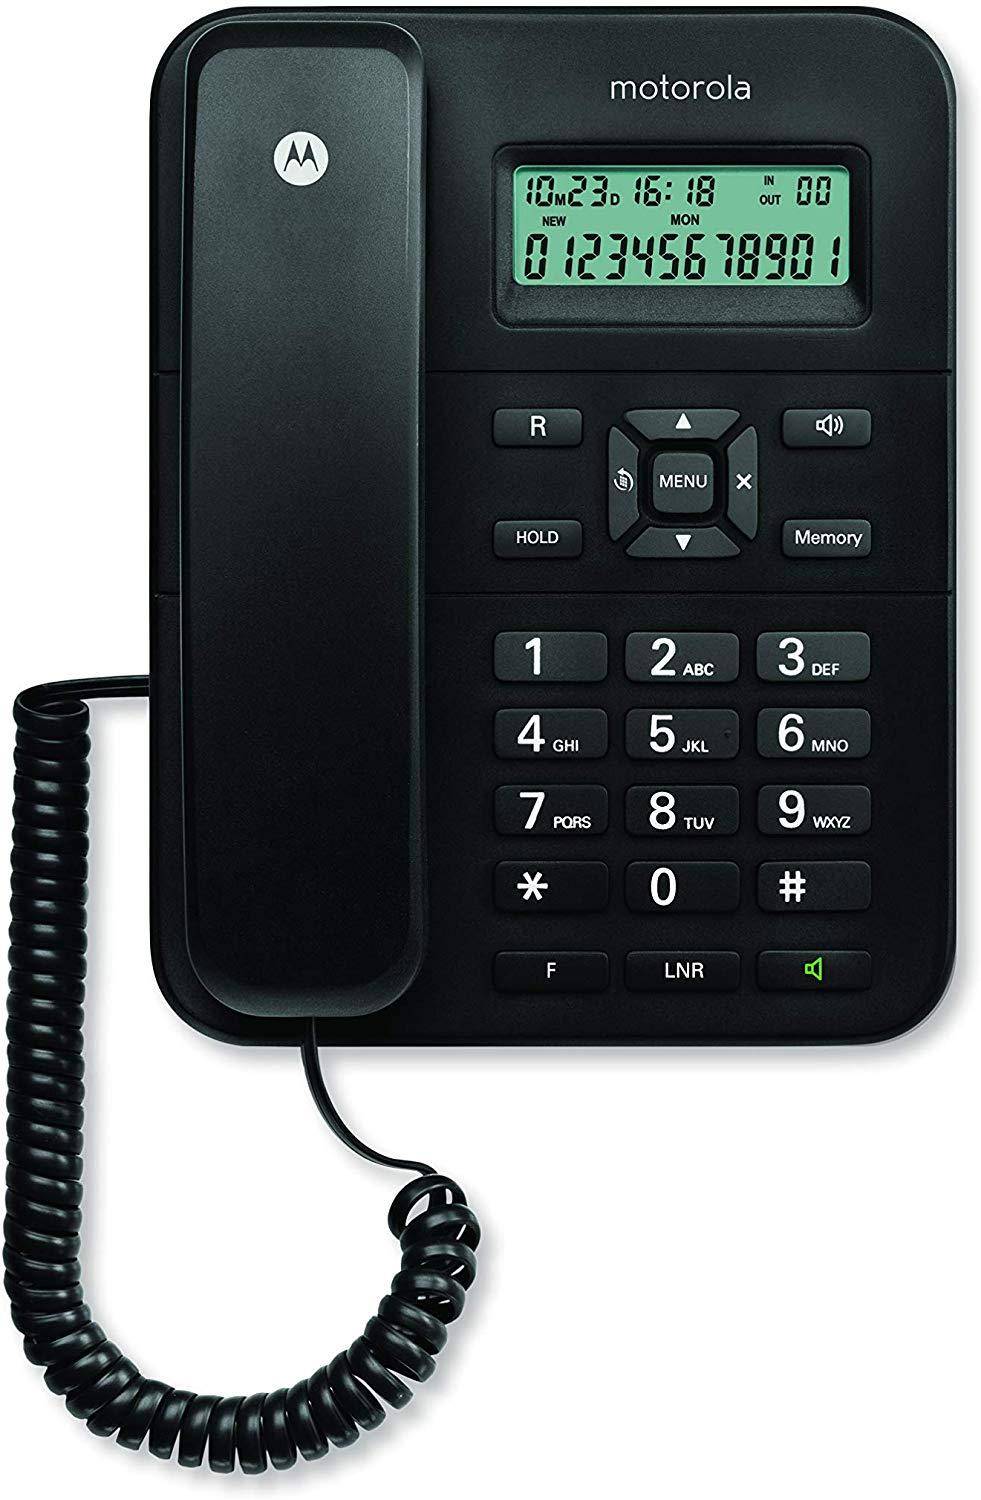 Motorola Corded Phone With Caller ID and Speaker Phone zoom image